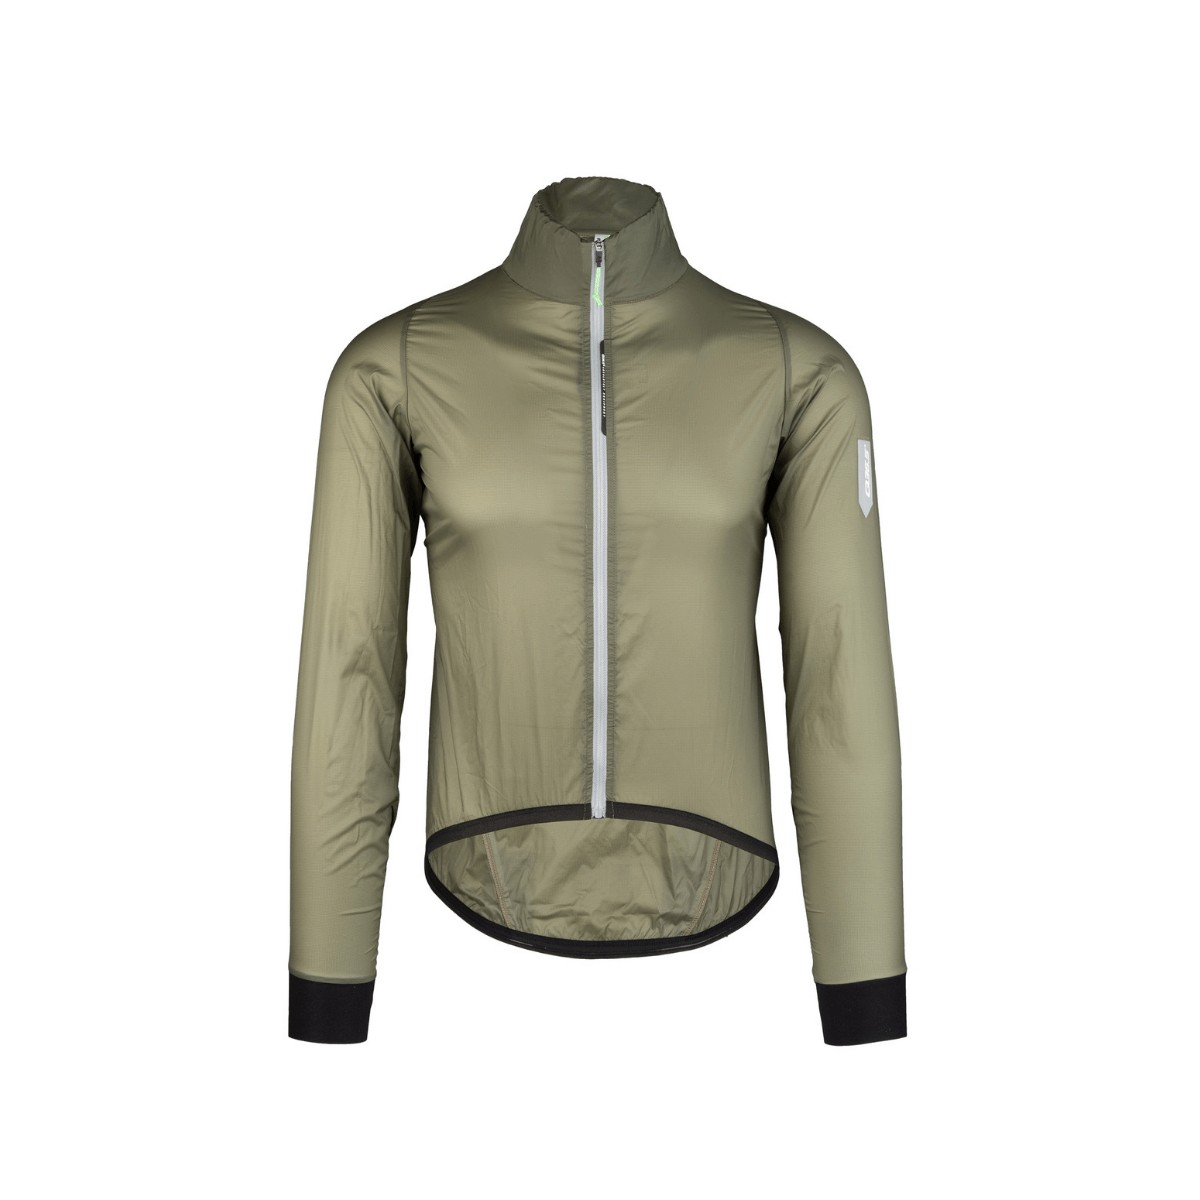 Q36.5 AIR-Shell Windbreaker Jacket Olive Green, Size S